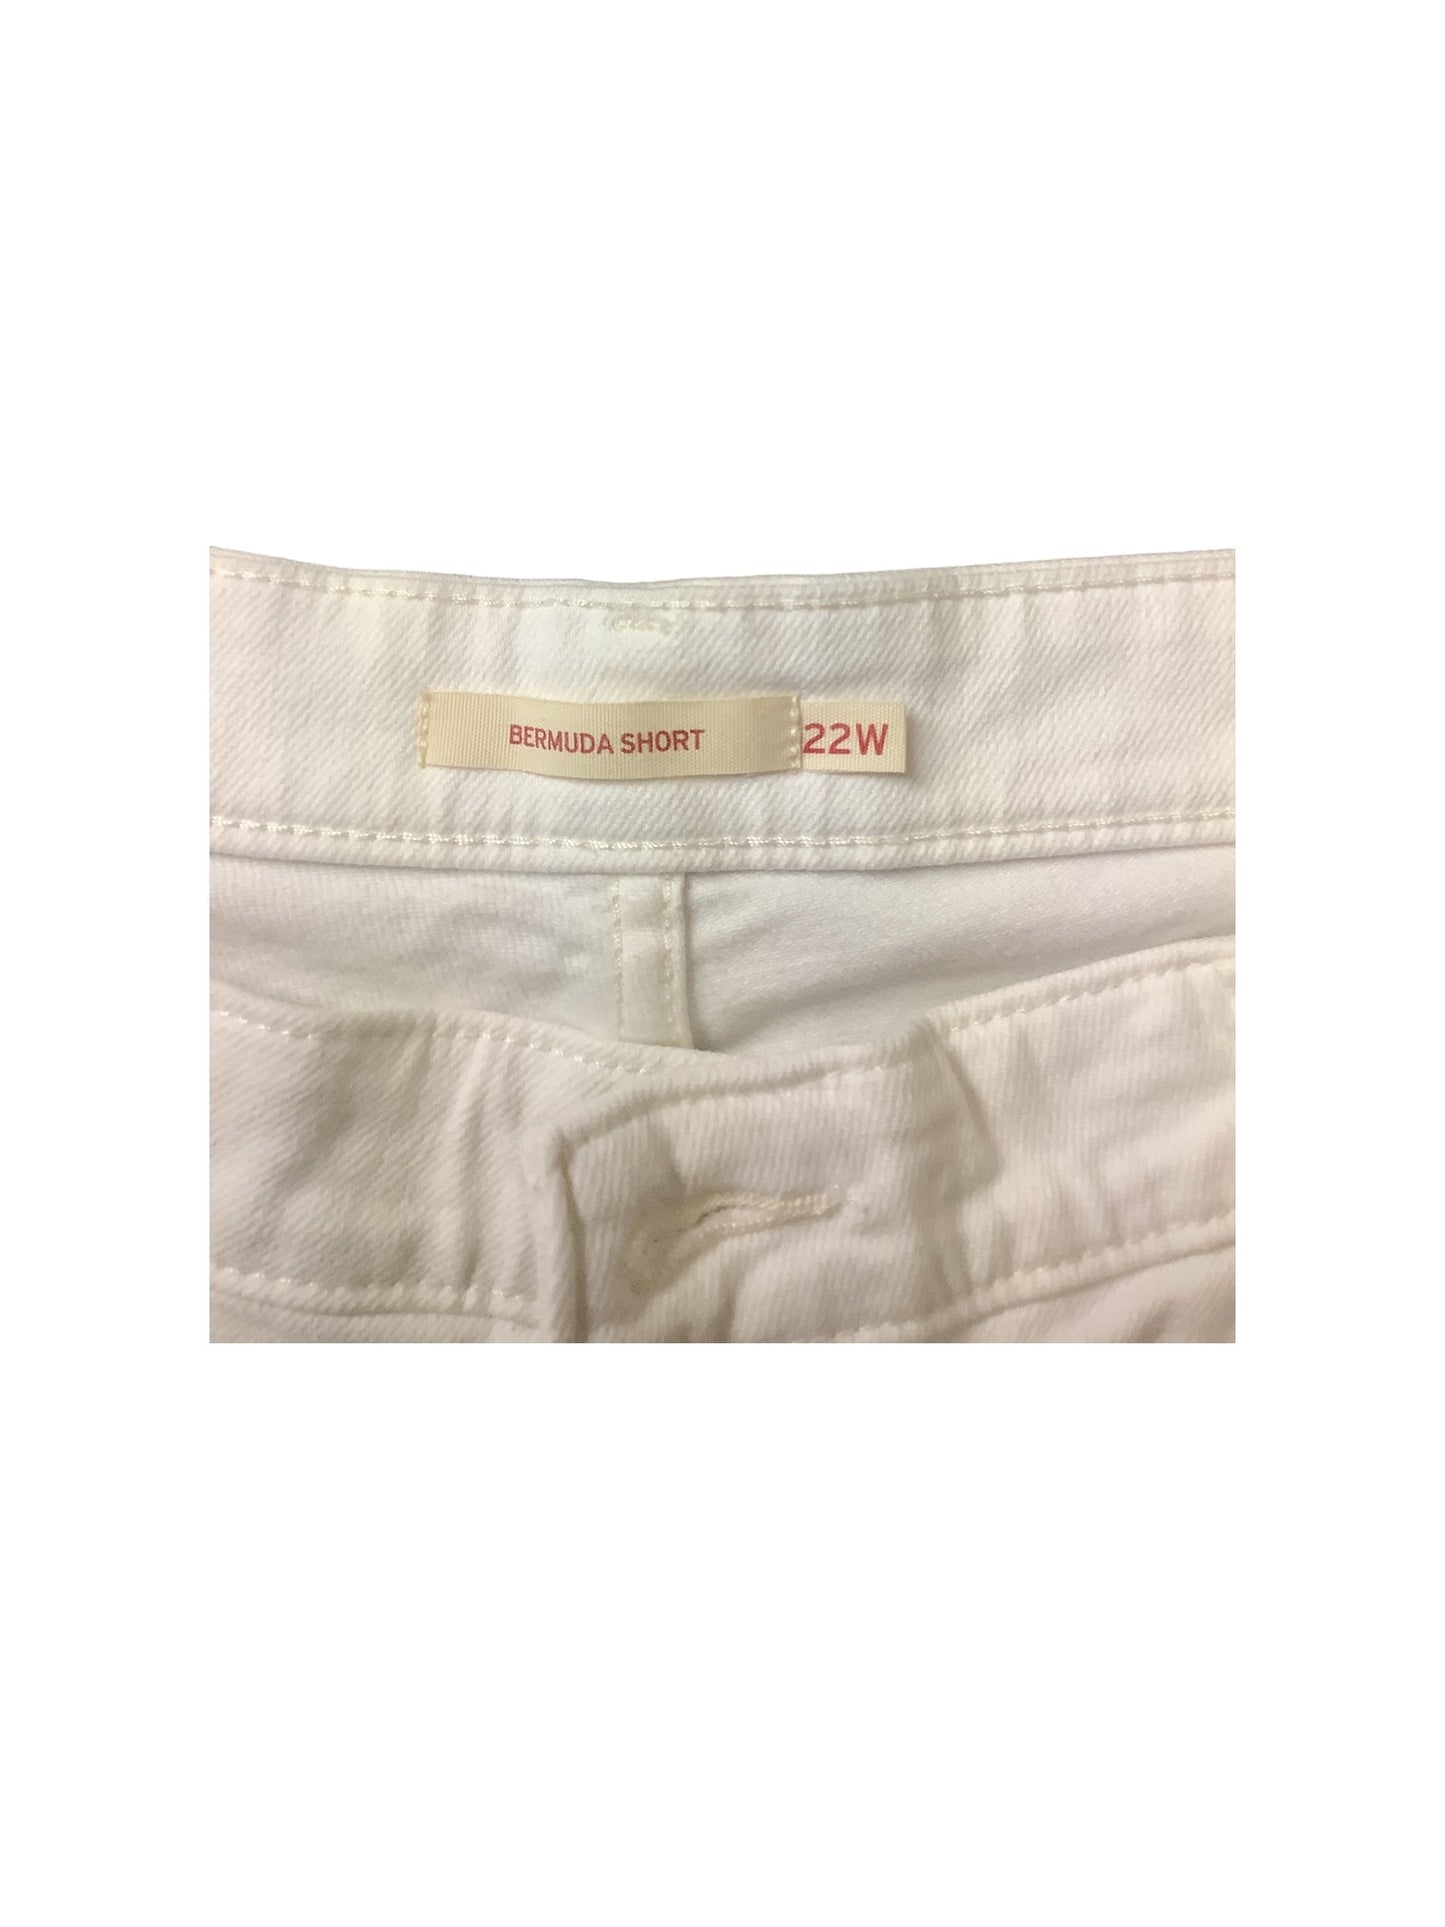 White Denim Shorts Levis, Size 22w